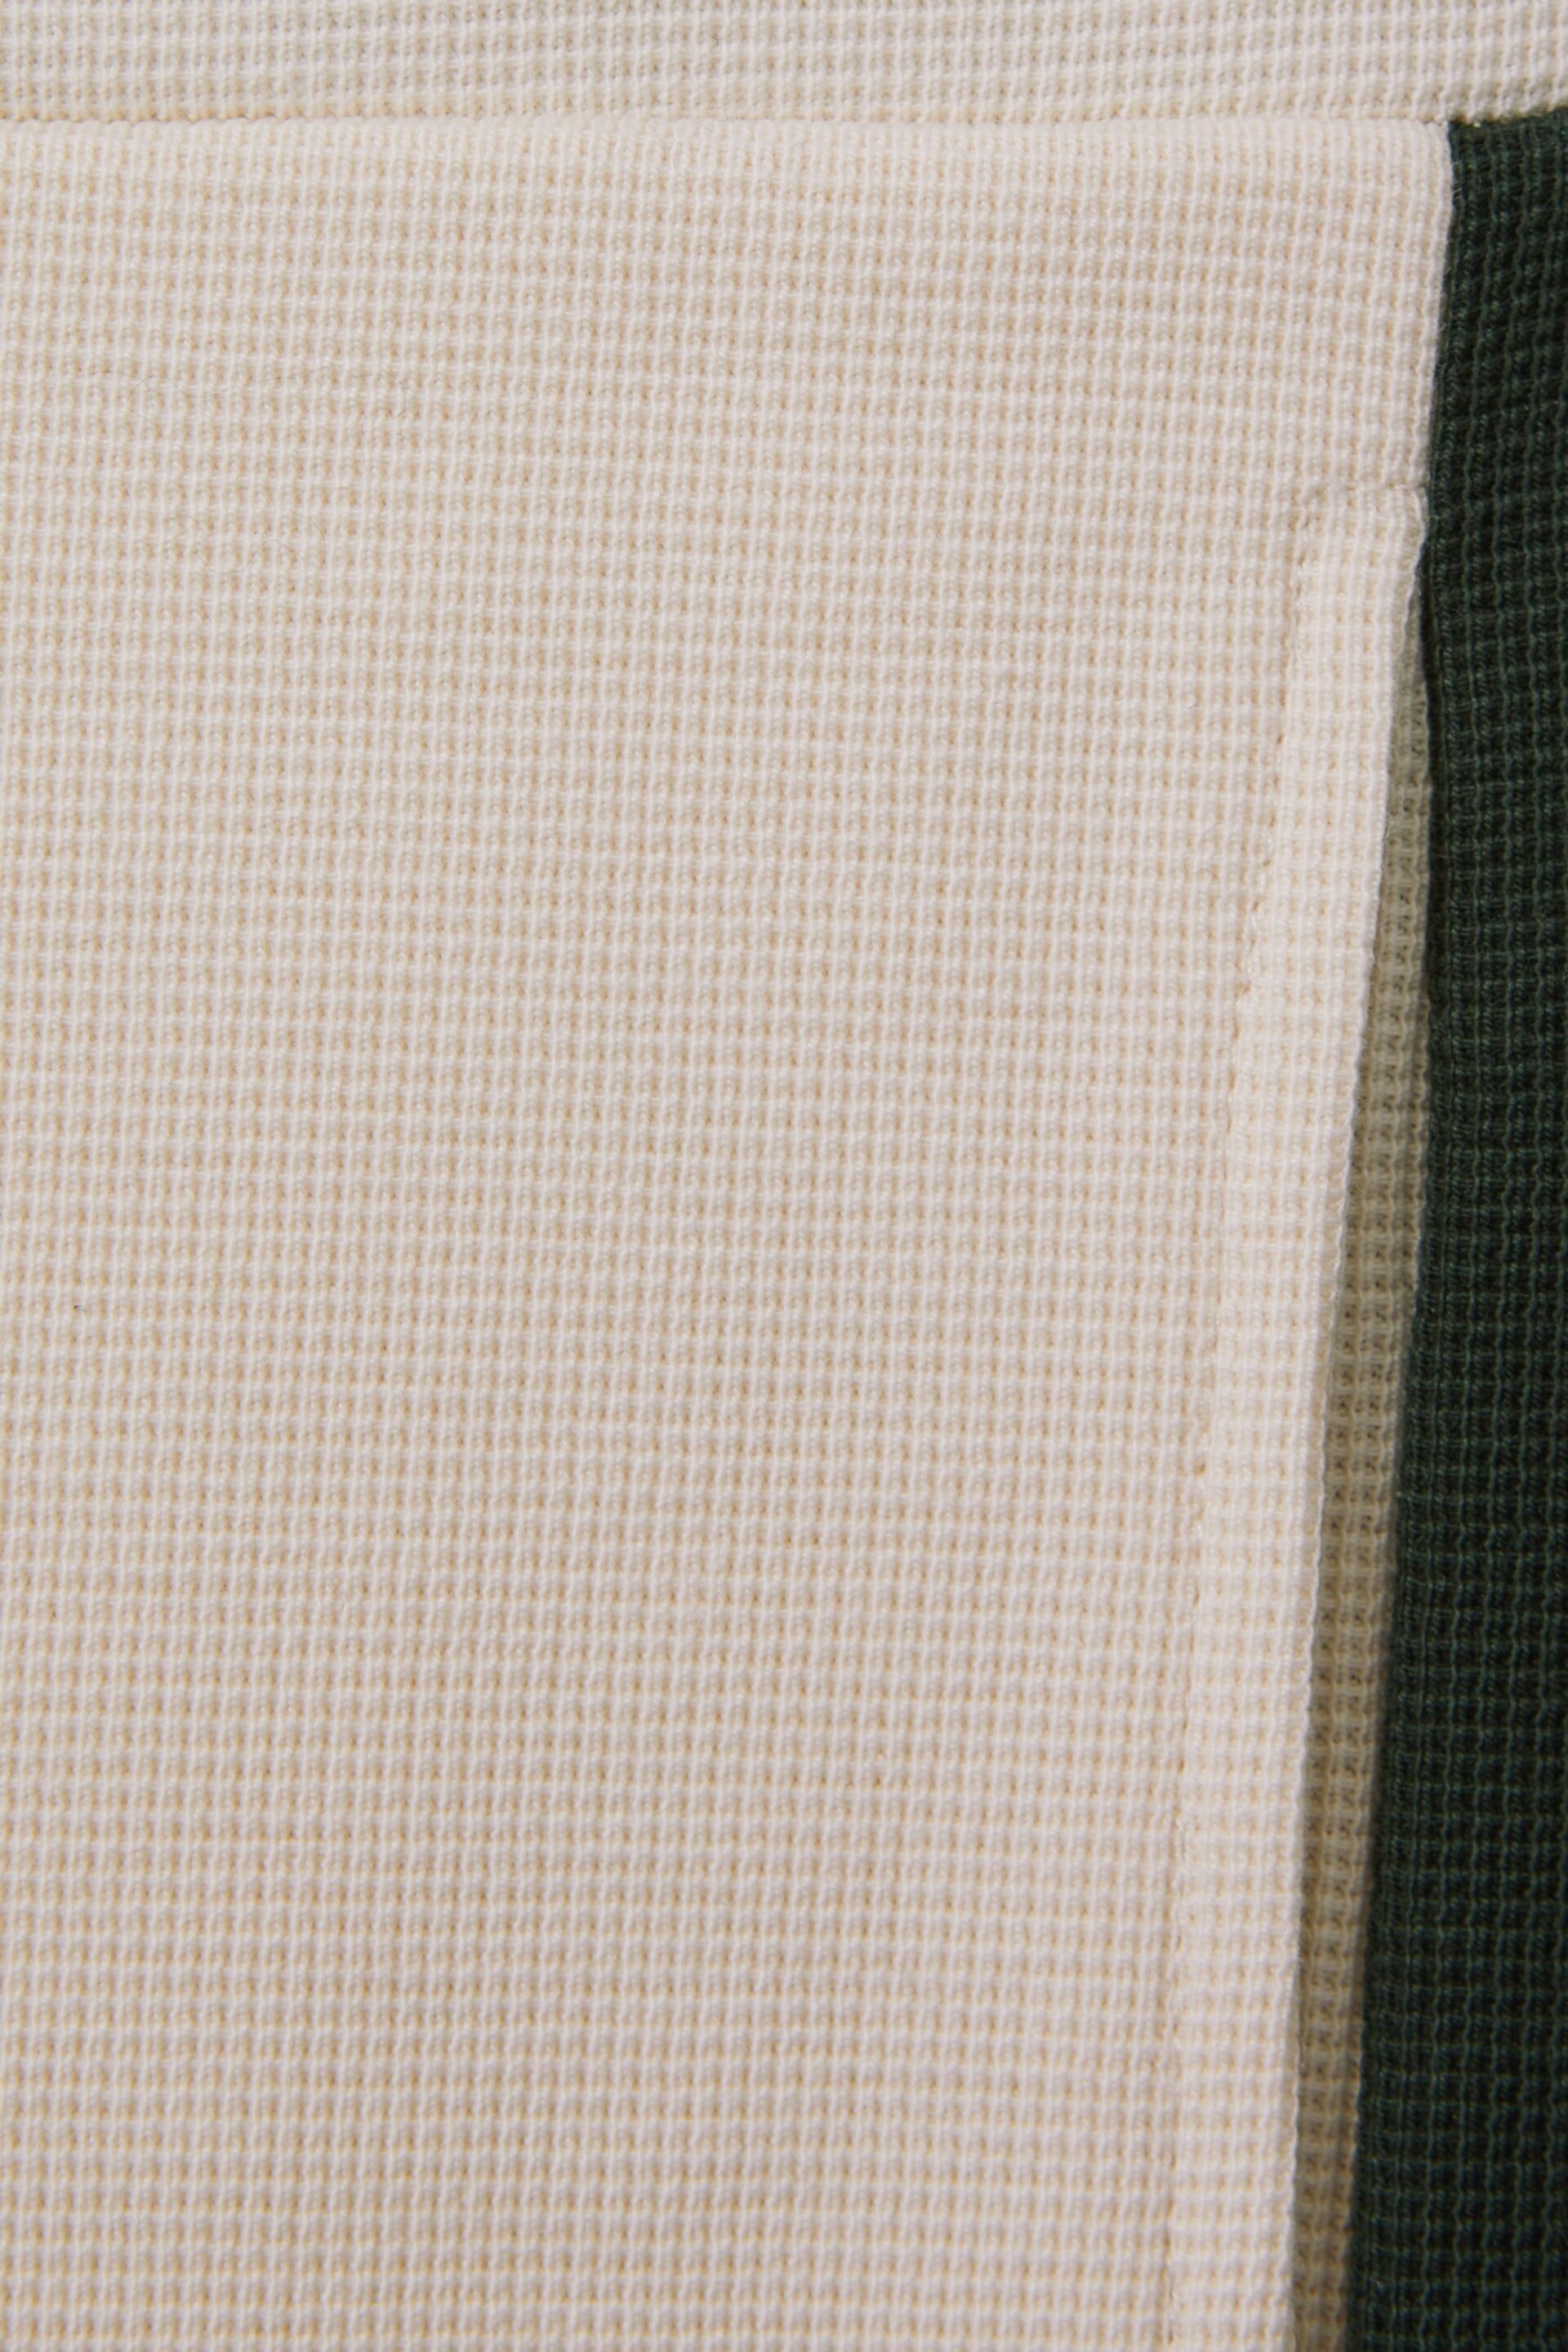 Reiss Ecru/Green Marl Junior Textured Cotton Drawstring Shorts - Image 4 of 4